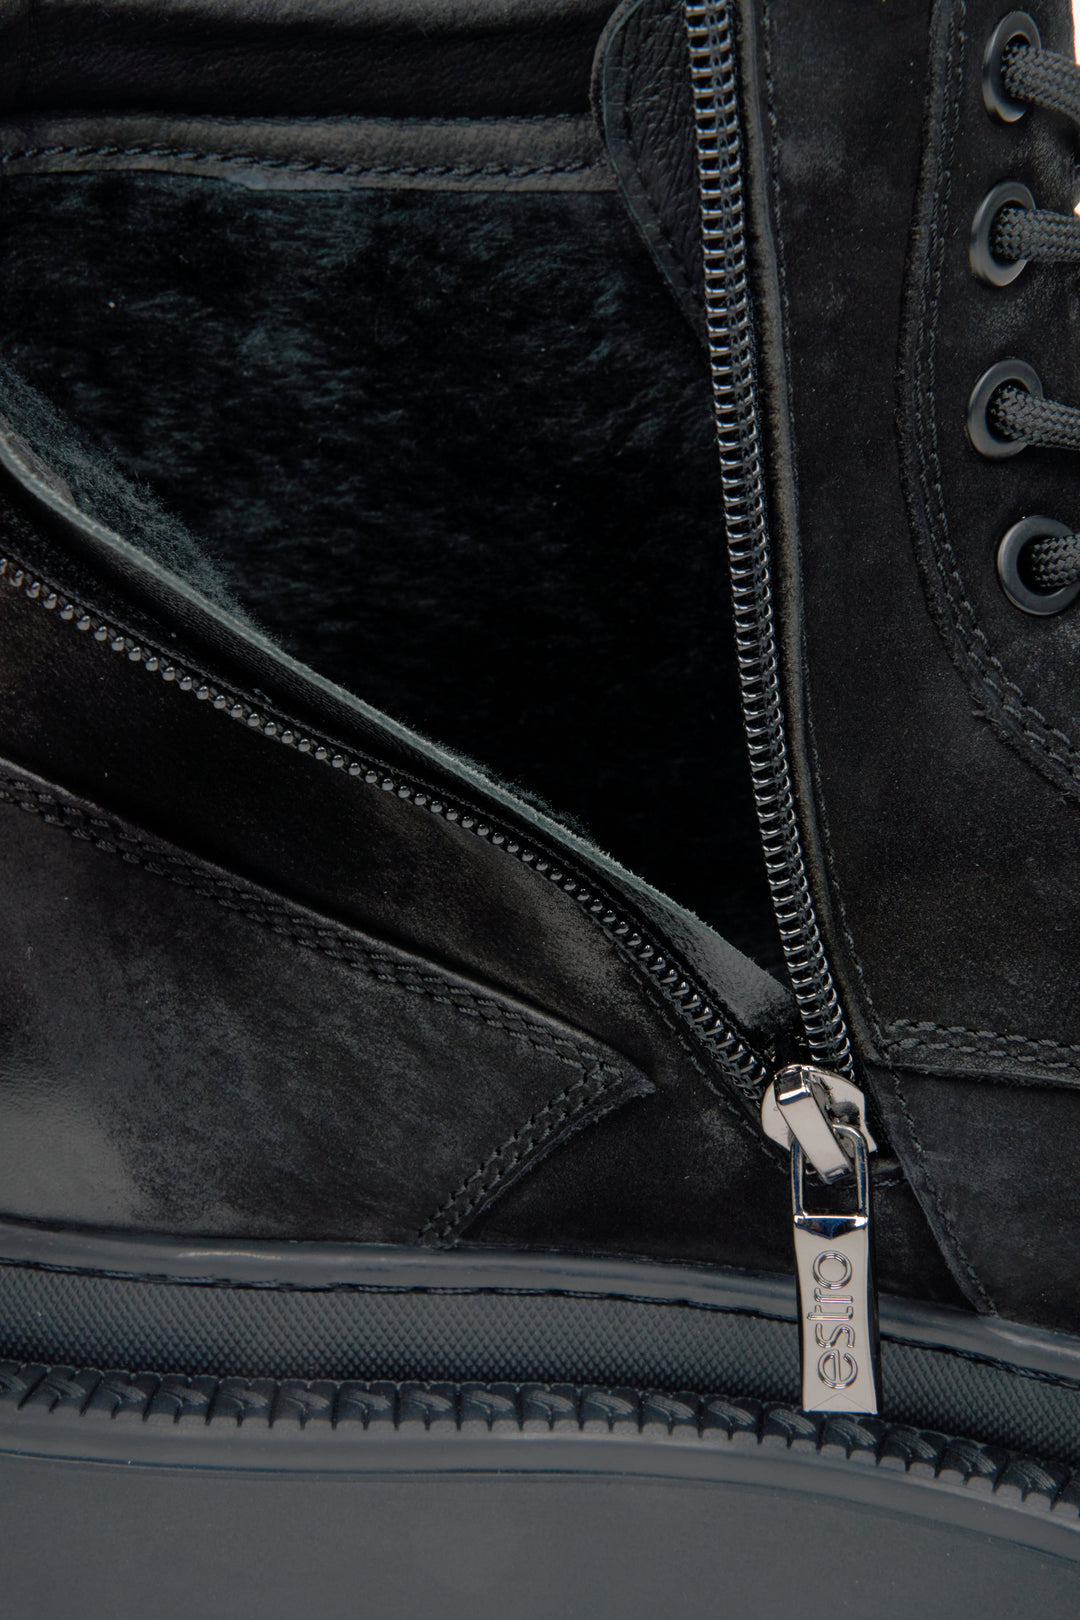 Men's nubuck black boots by Estro - close-up on the interior.